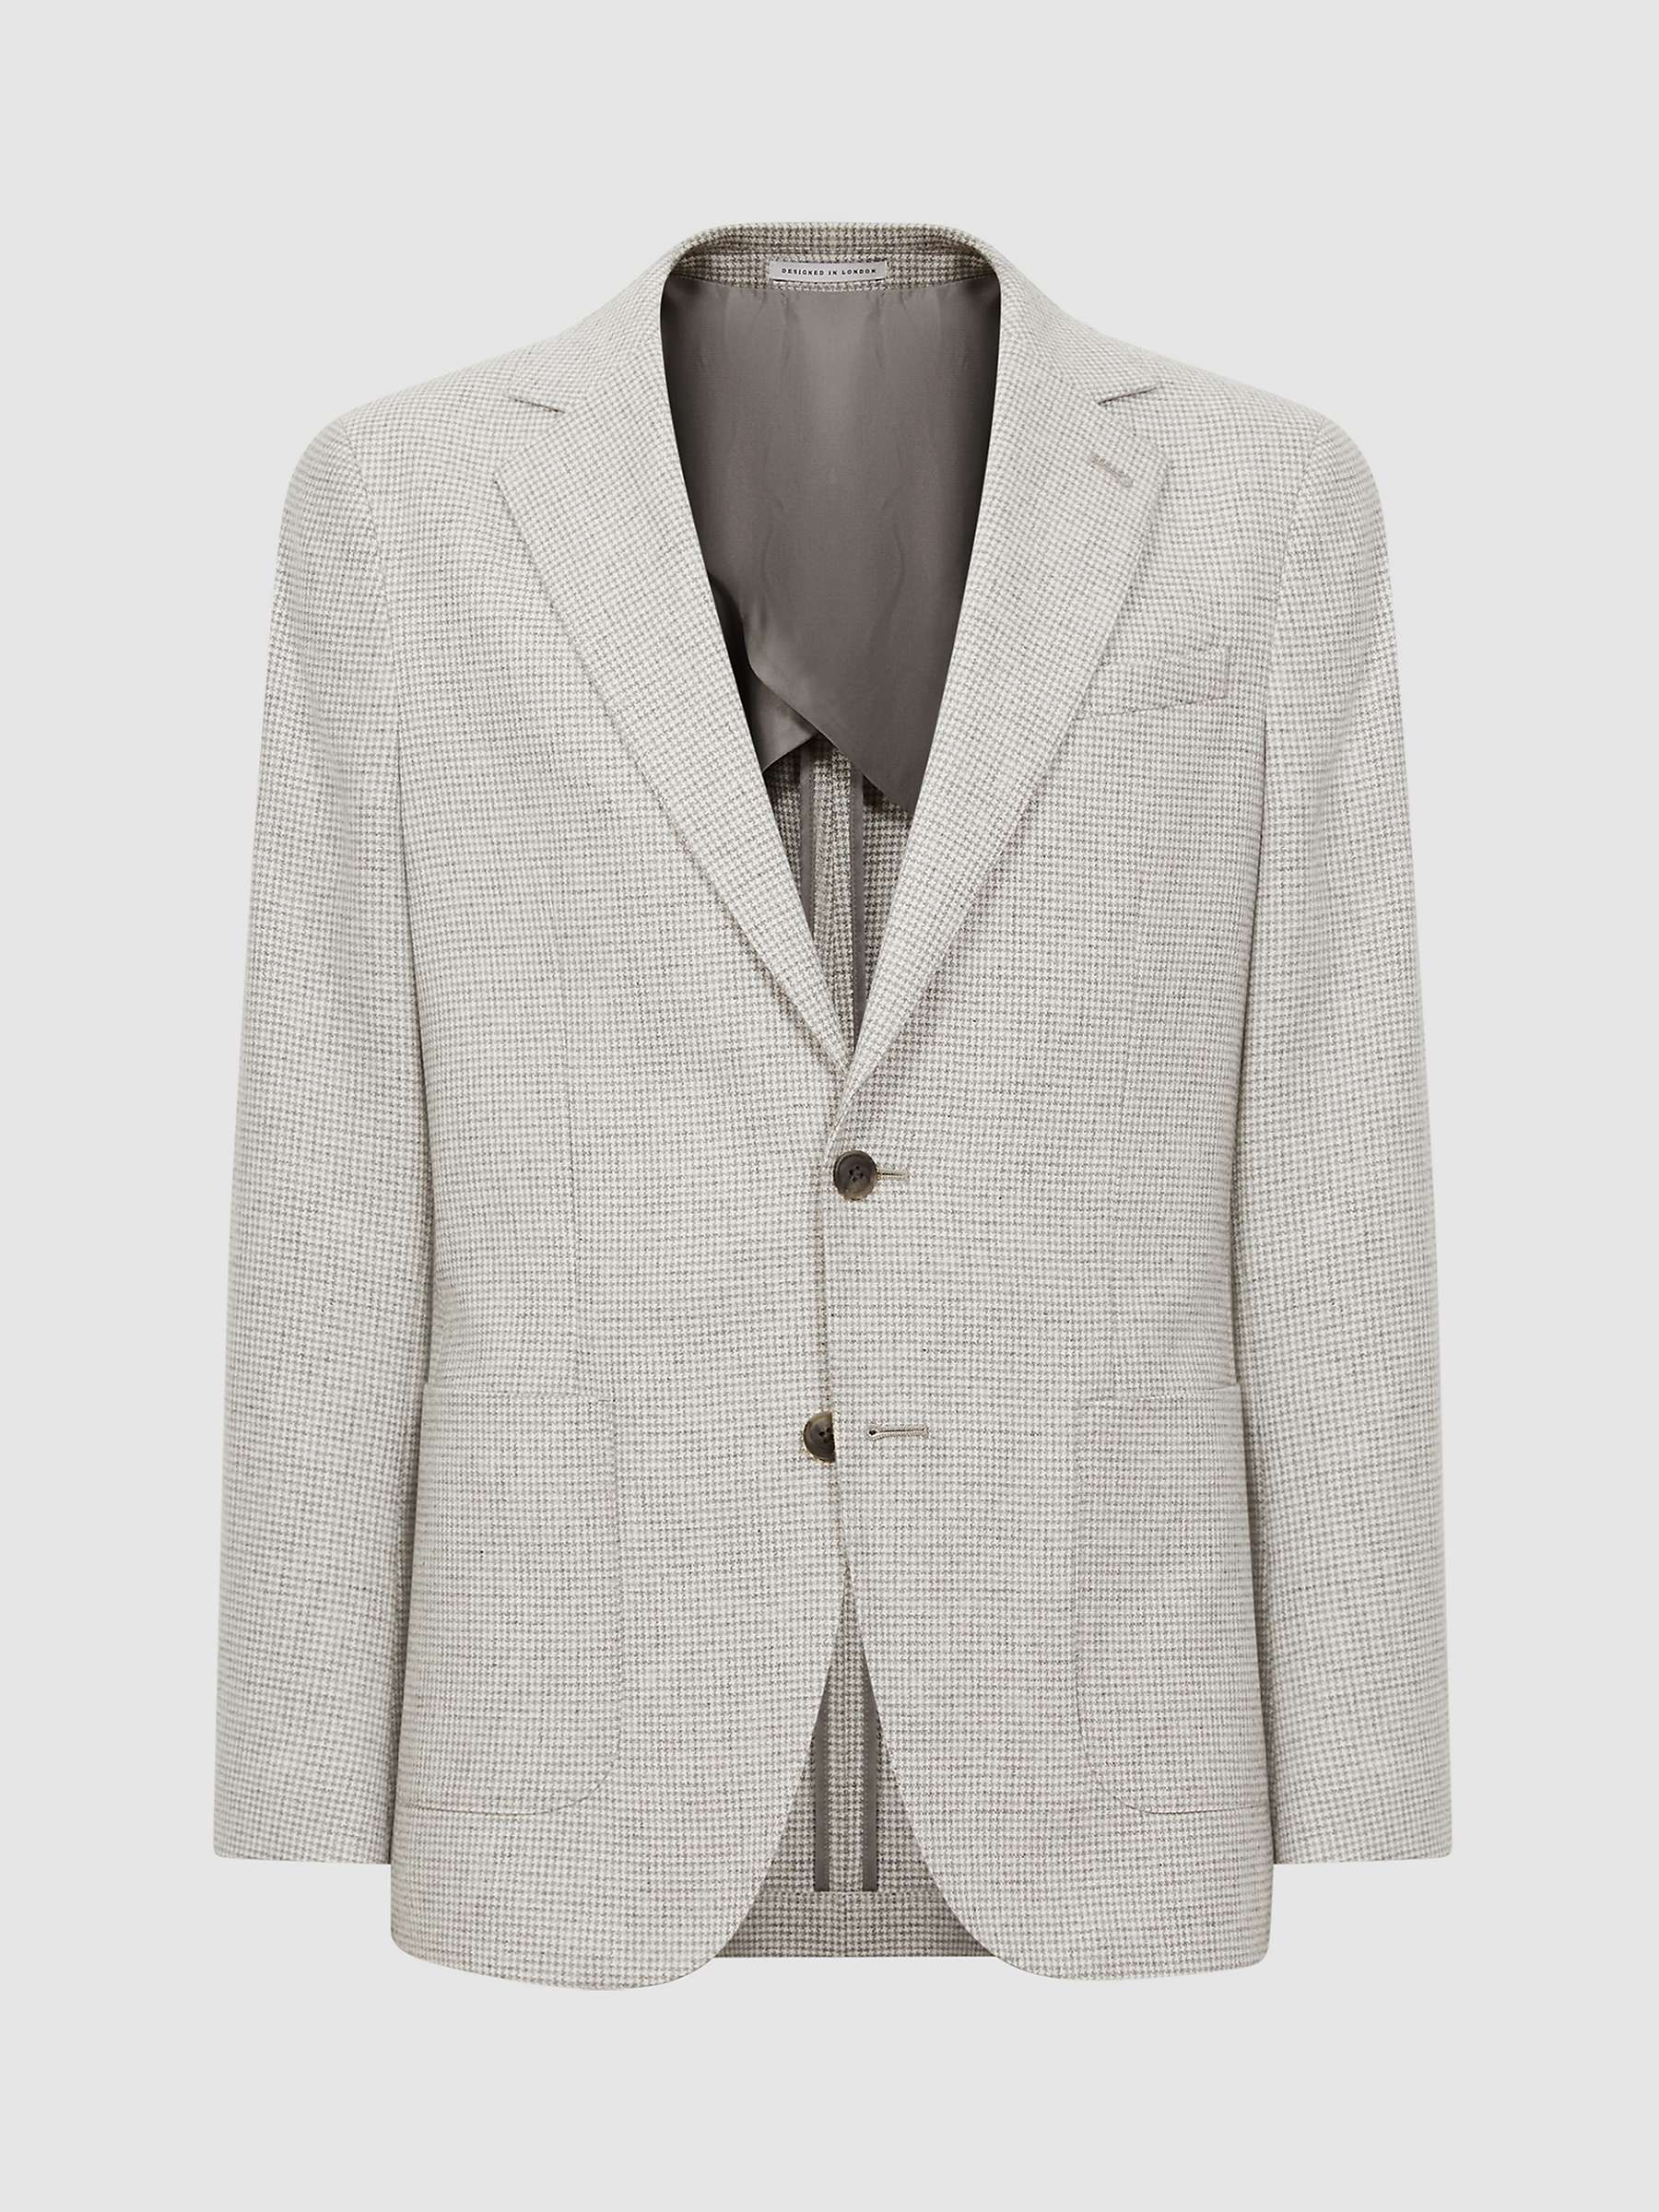 Reiss Flock Wool Blend Suit Blazer, Grey at John Lewis & Partners